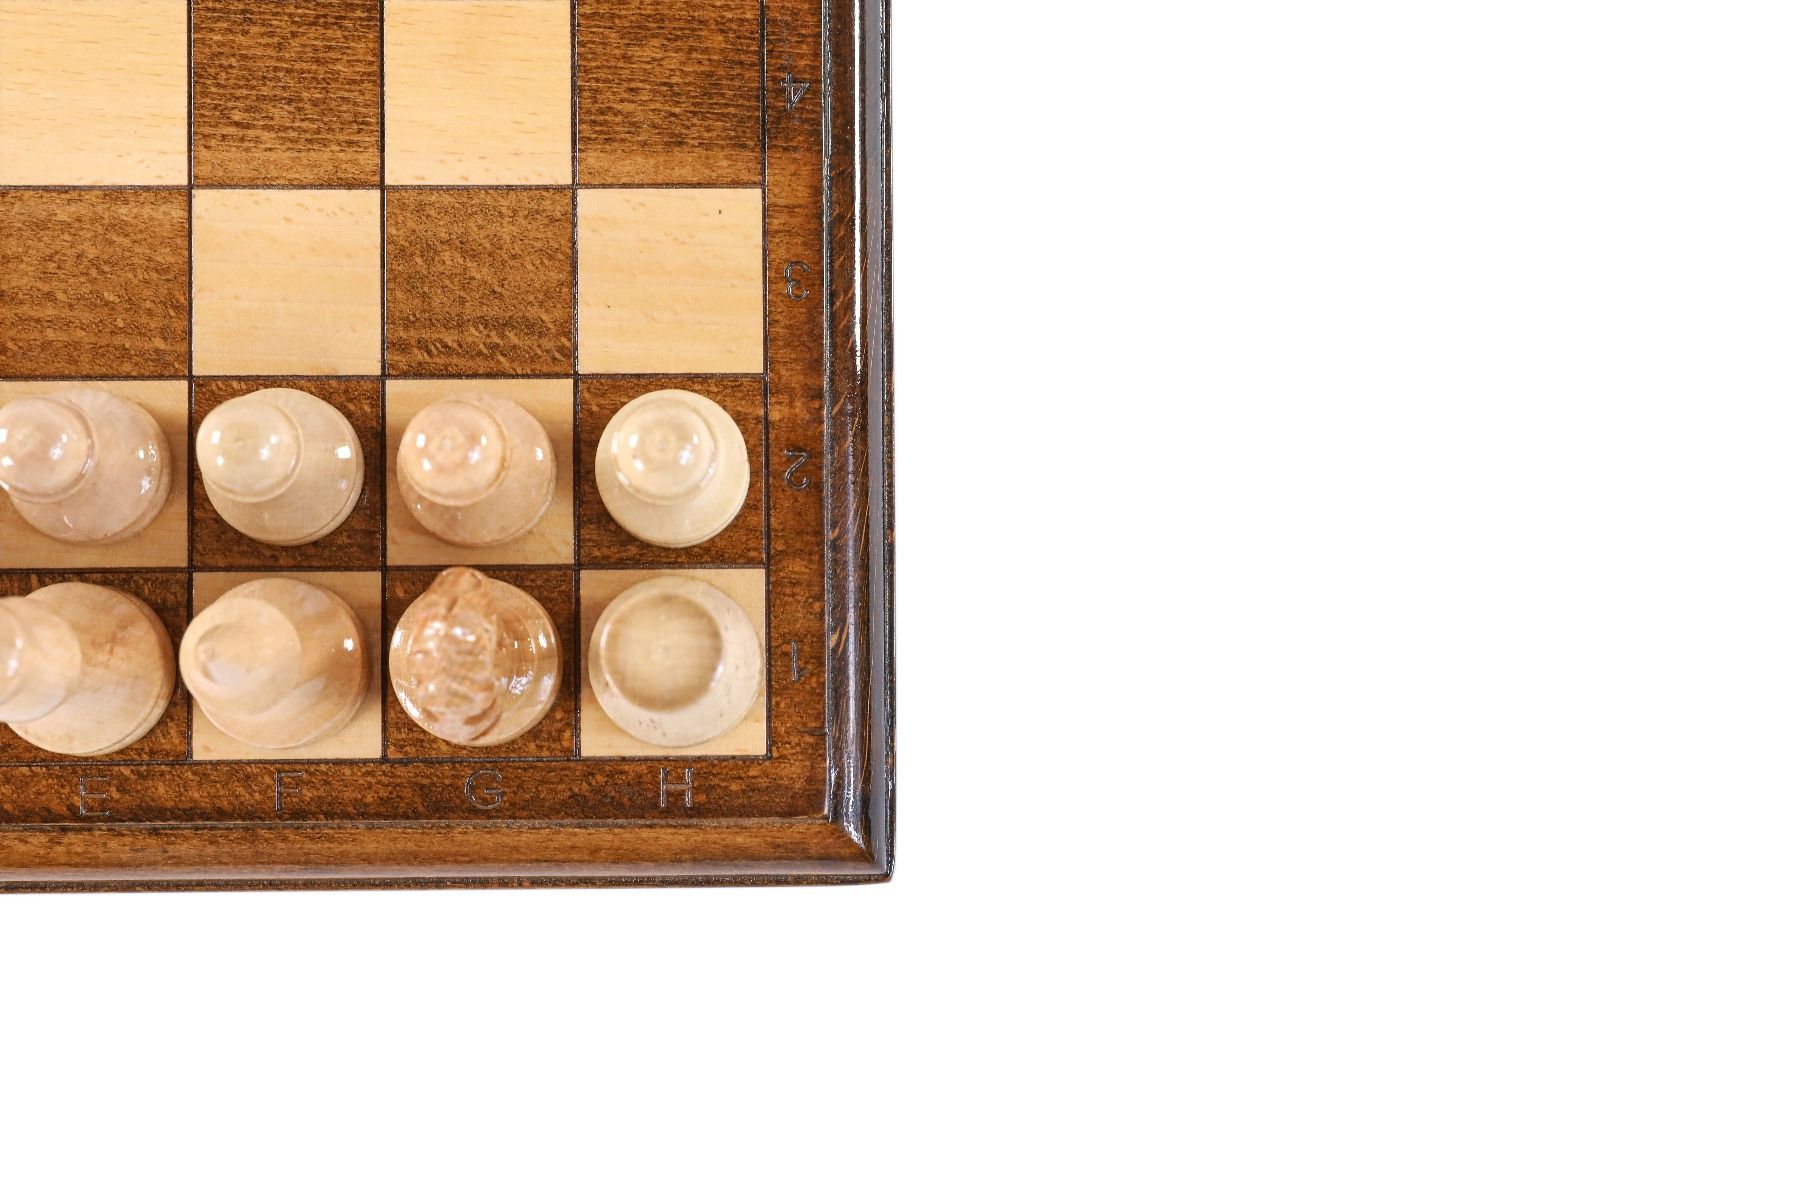 Square Chess Set